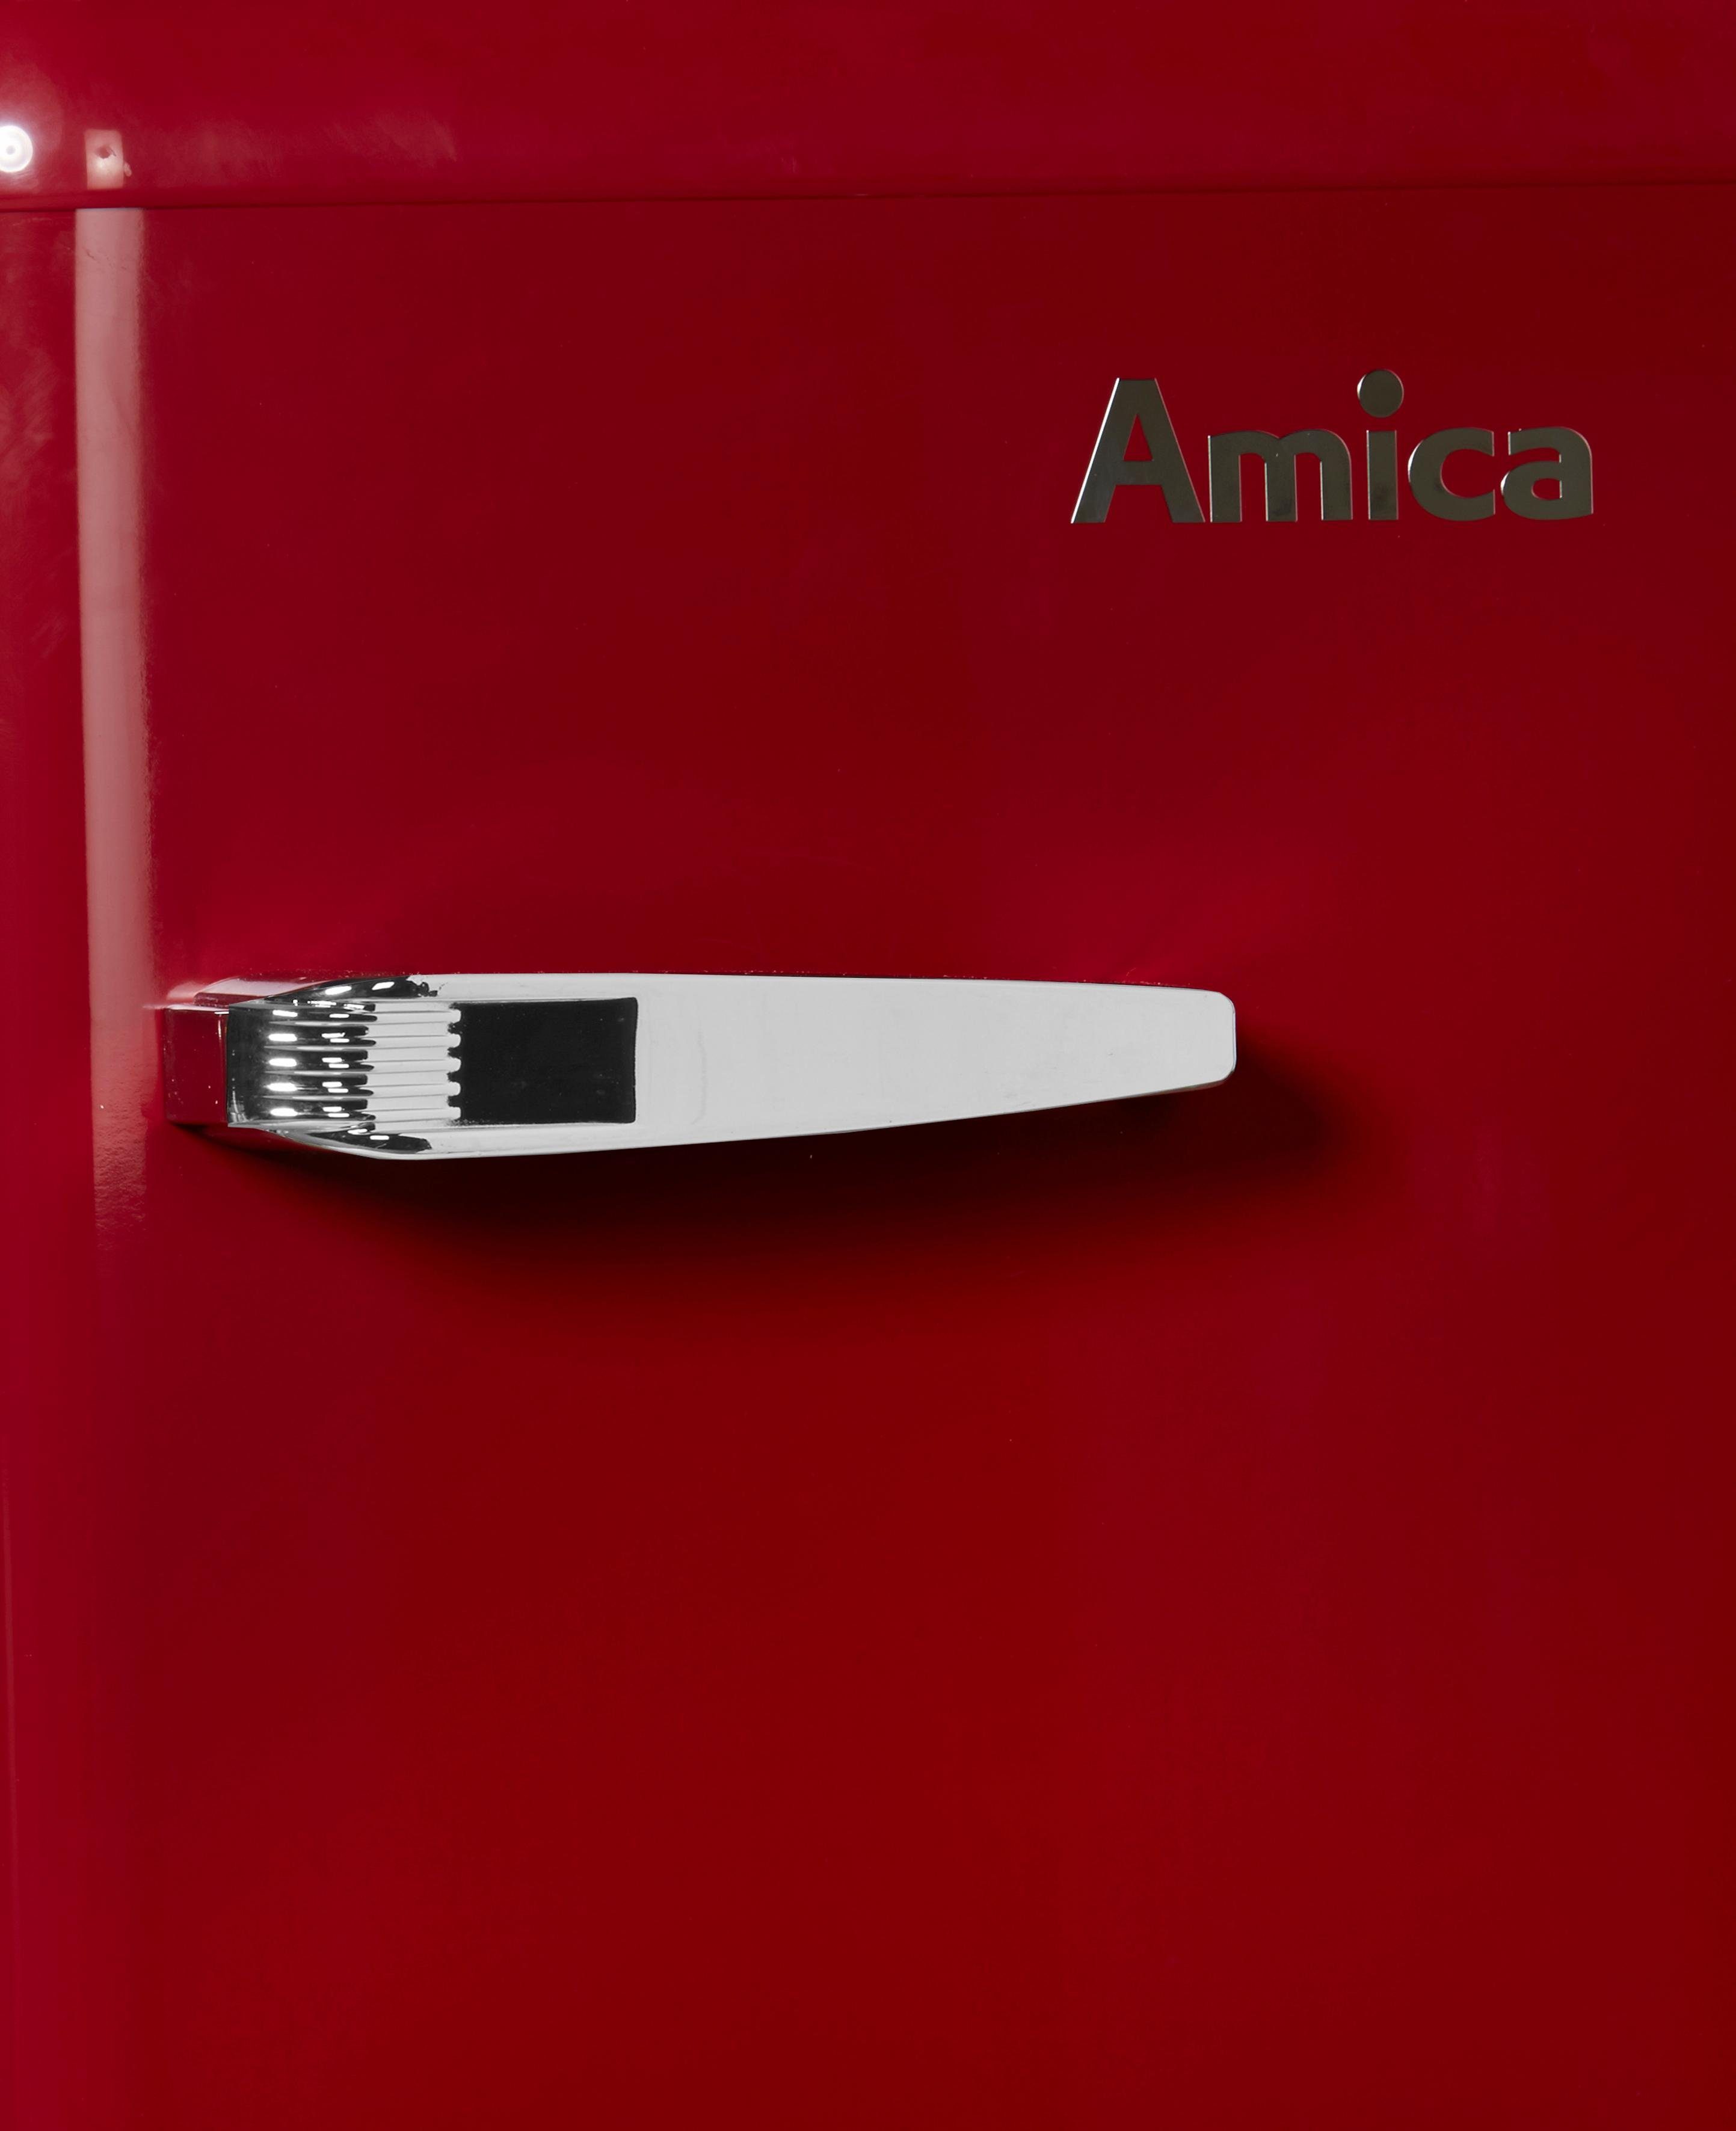 Amica Table Top Kühlschrank KS hoch, breit 87,5 15611 55 cm R, cm weinrot